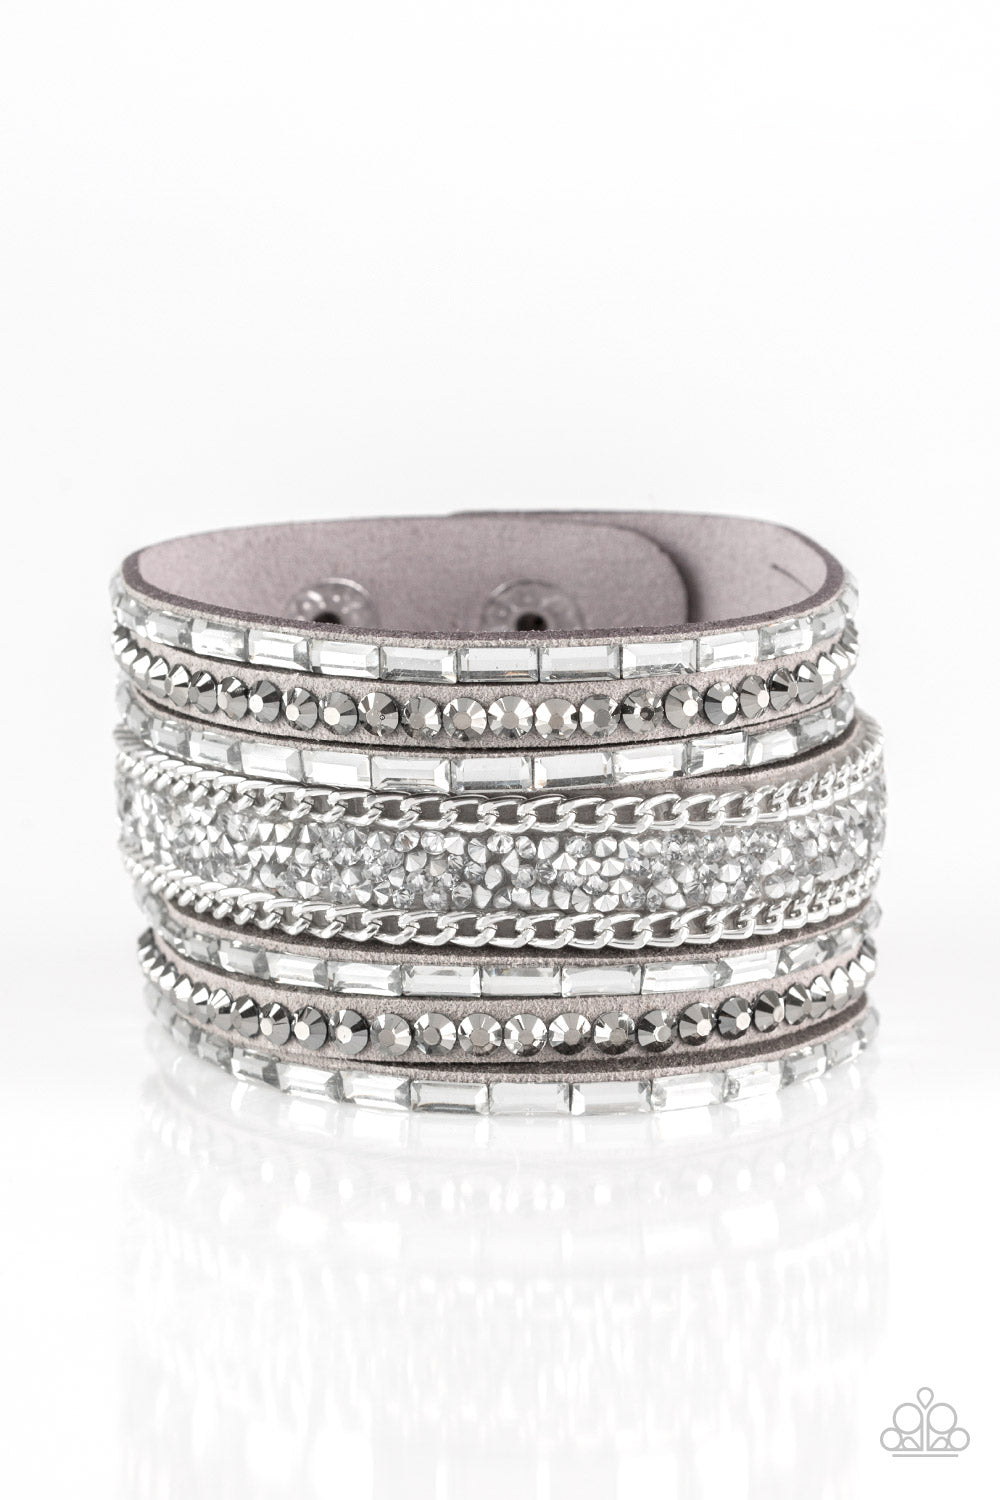 Urban Rhinestone Jewelry Rumble - Silver | Fashion Fabulous Paparazzi Bracelet -